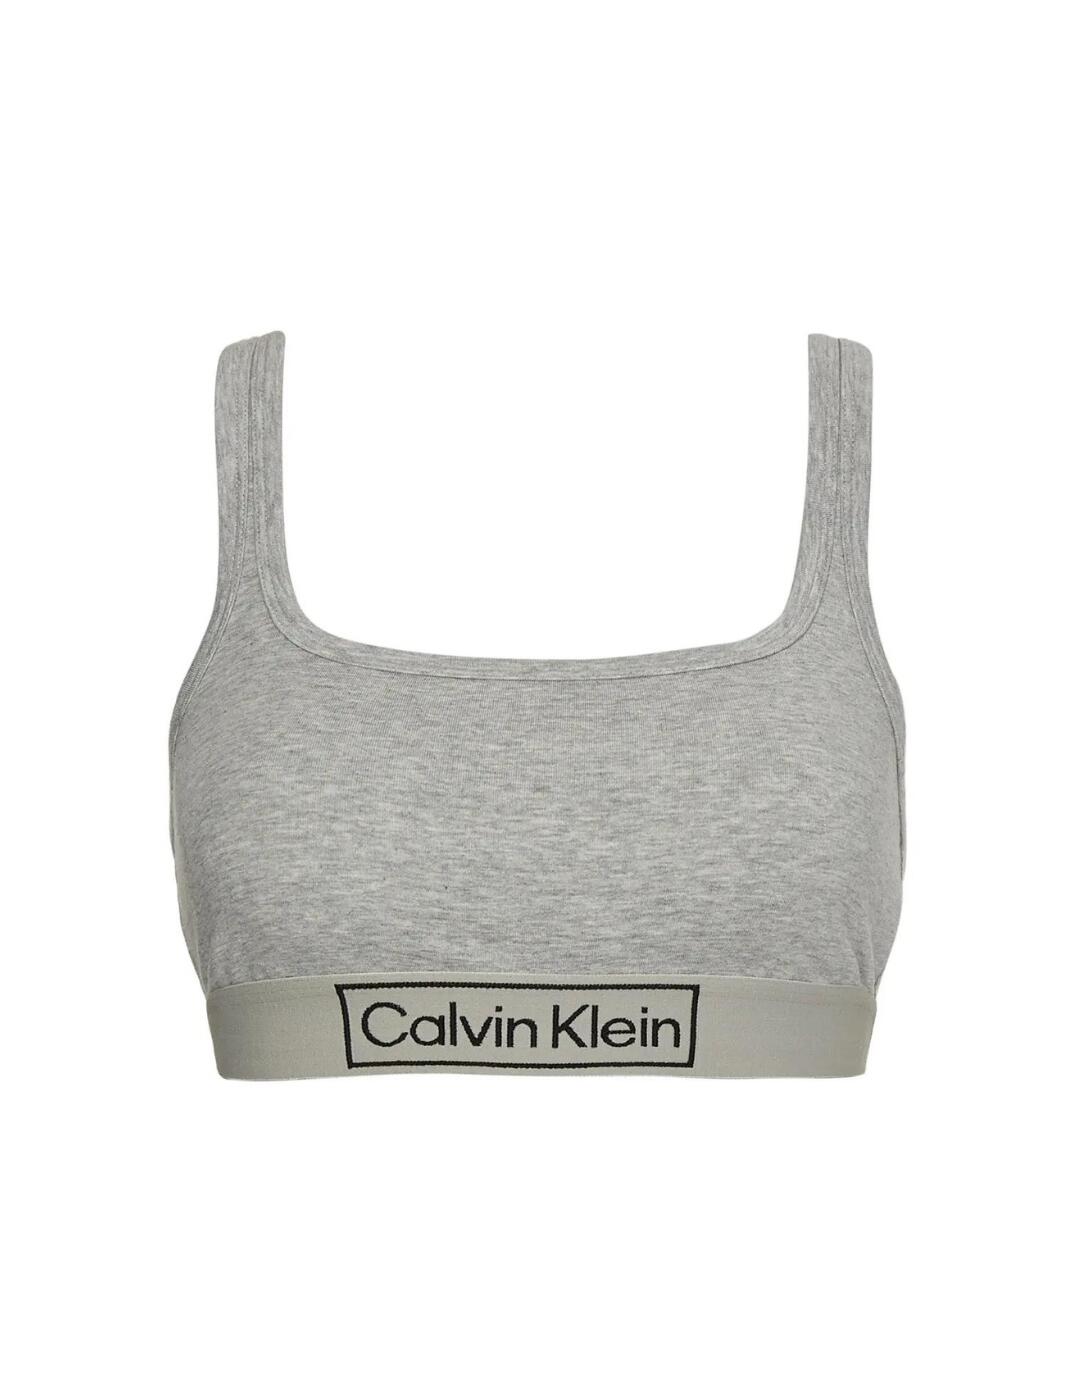 Calvin Klein CK One Recycled Unlined Bralette - Belle Lingerie